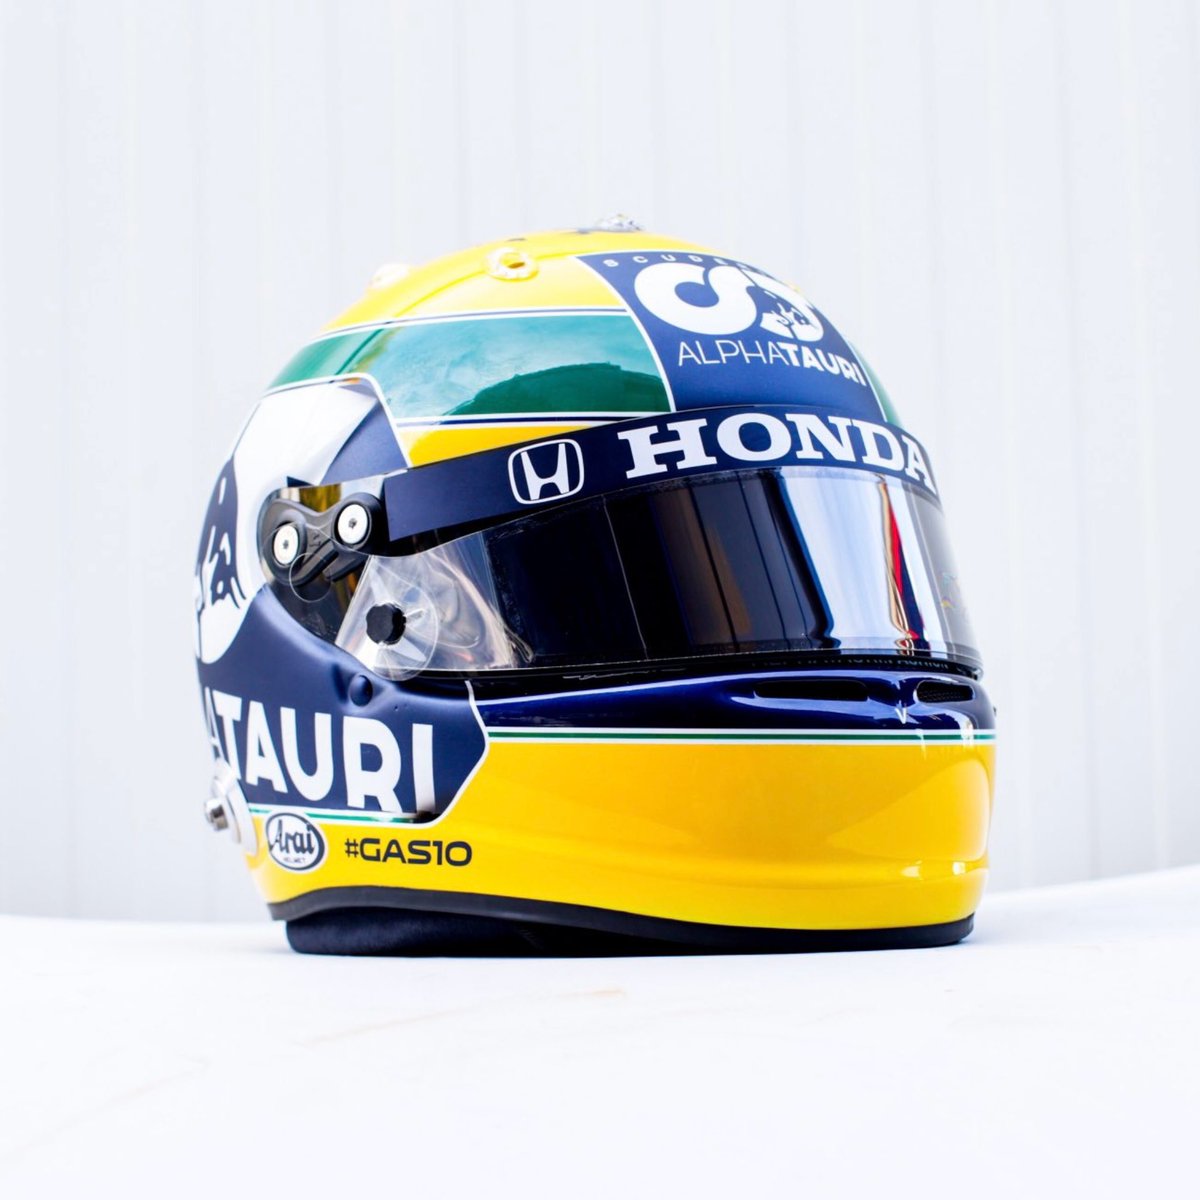 Pierre Gasly’s Senna Tribute helmets are always UNREAL 🤩